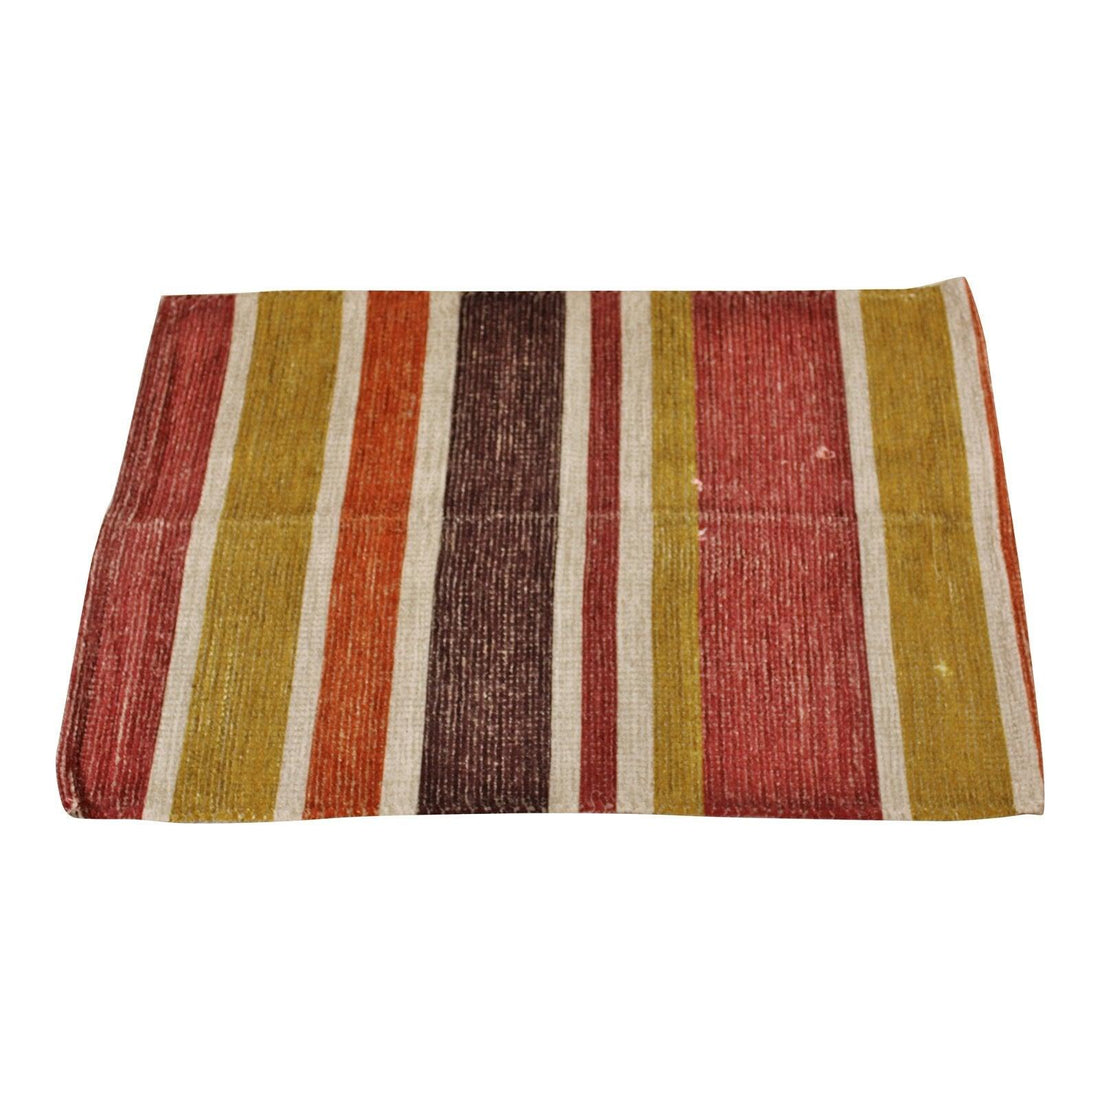 Moroccan Inspired Kasbah Rug, Striped Design, 60x90cm - £38.99 - Rugs 